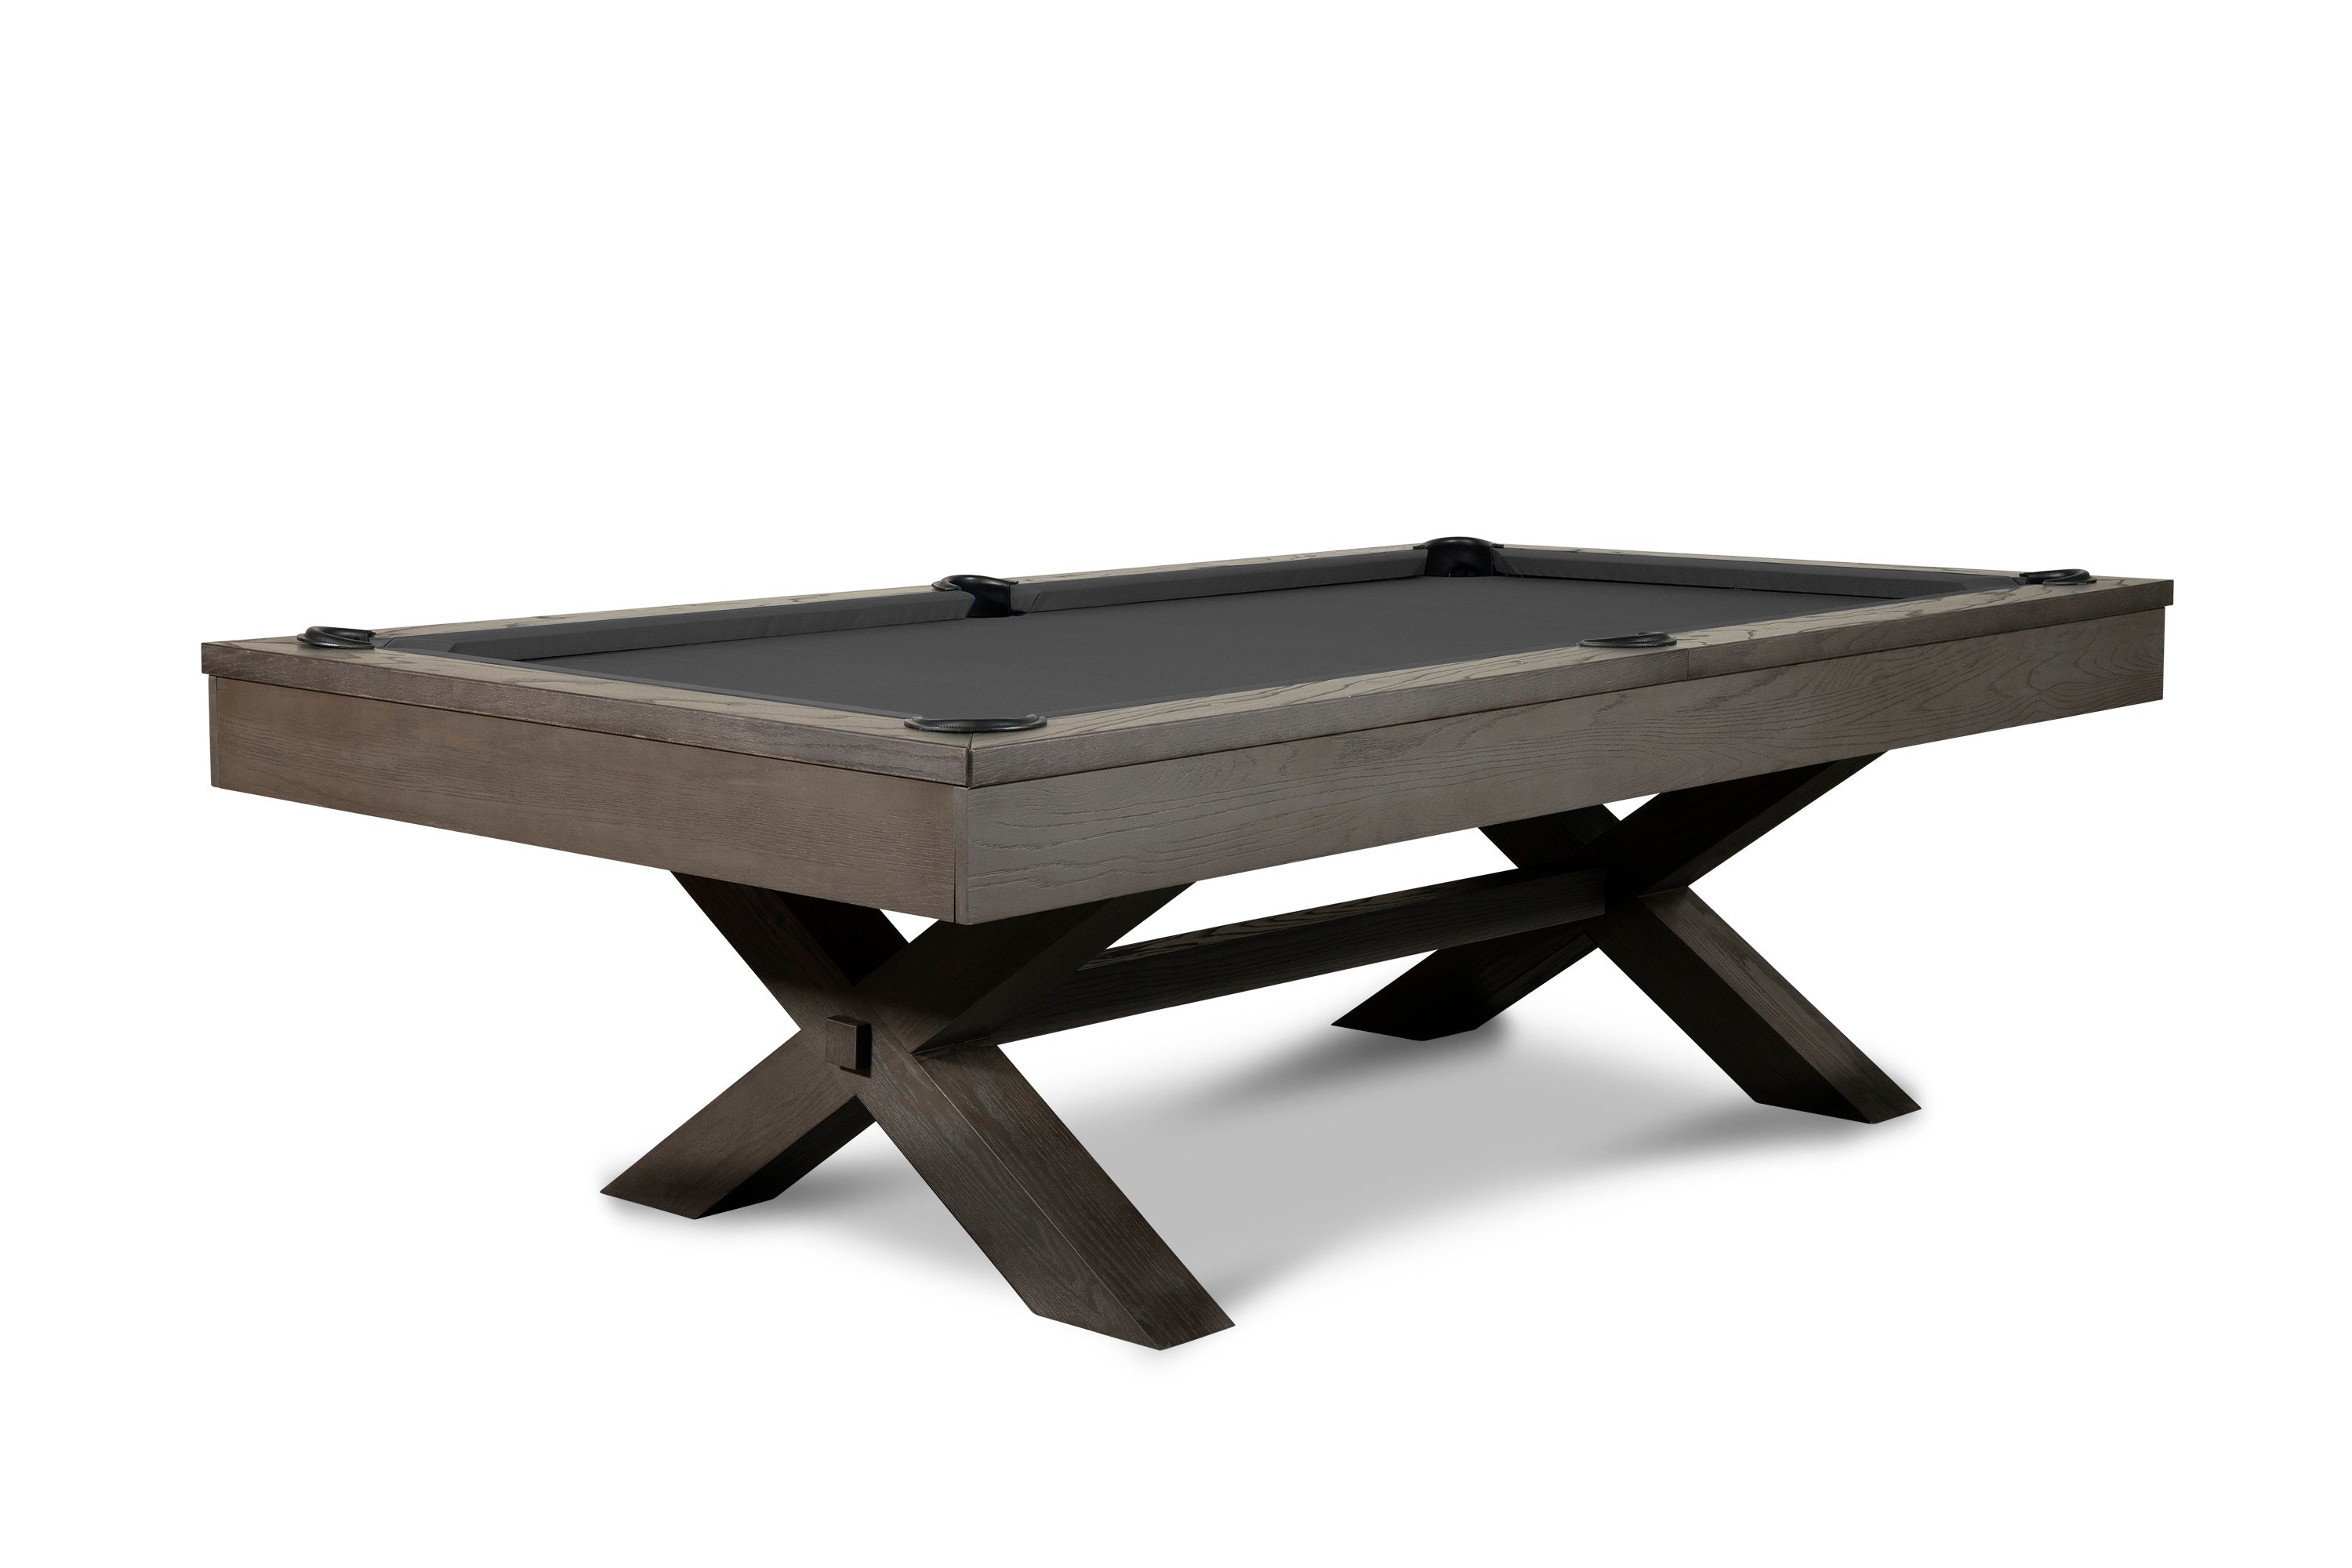 Nixon CrissyCross 7' Slate Pool Table in Charcoal Finish w/ Dining Top Option